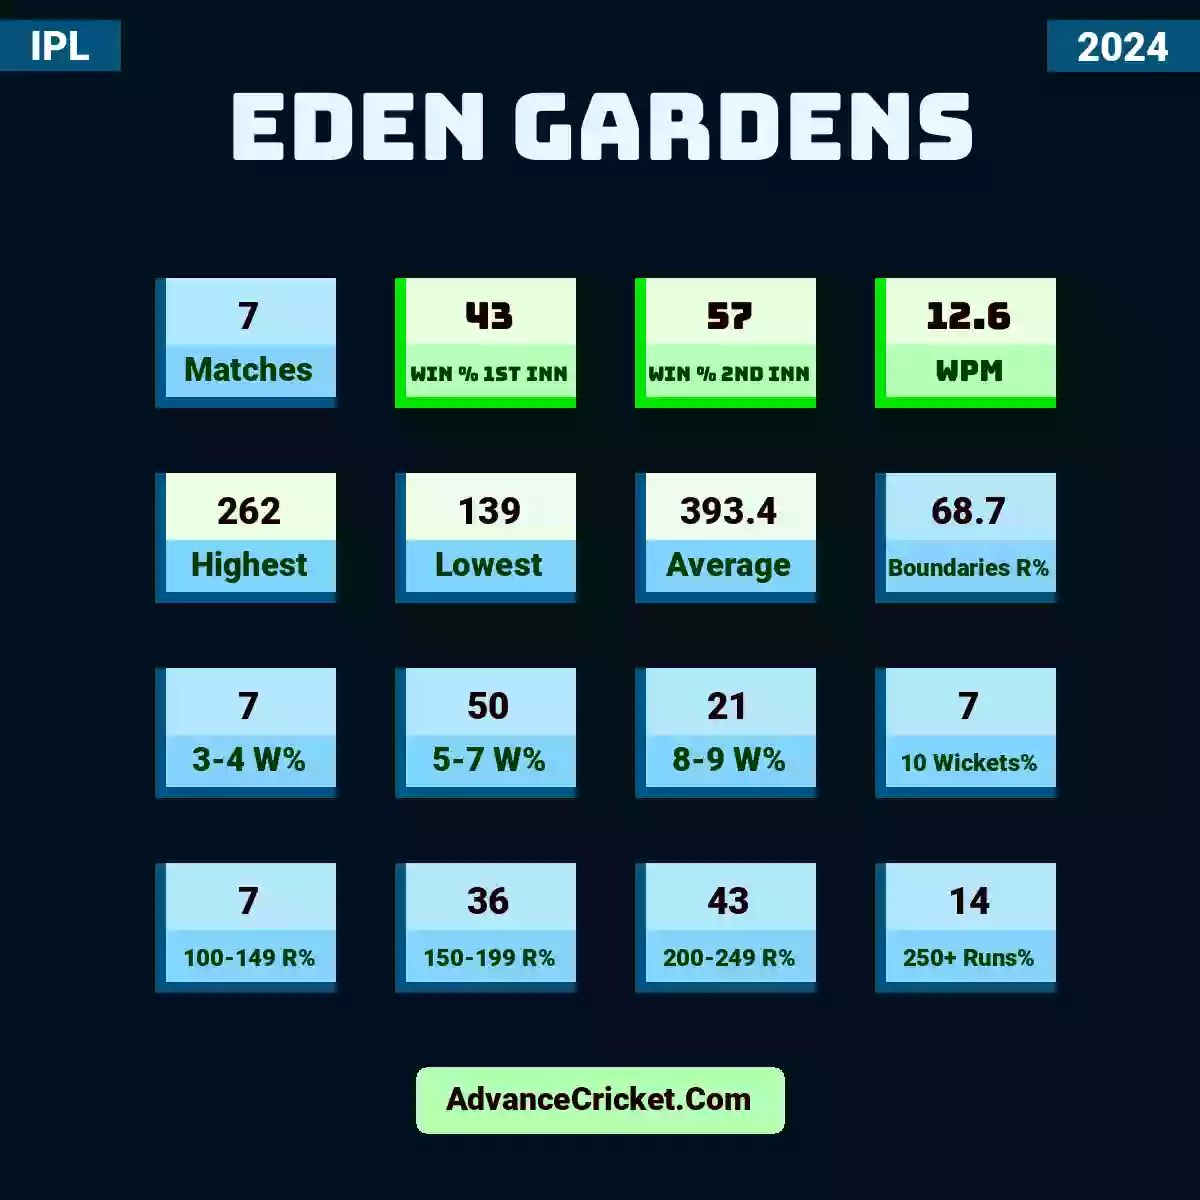 Image showing Eden Gardens IPL 2024 with Matches: 5, Win % 1st Inn: 40, Win % 2nd Inn: 60, WPM: 12.2, Highest: 262, Lowest: 161, Average: 429.6, Boundaries R%: 67.4, 3-4 W%: 0, 5-7 W%: 60, 8-9 W%: 10, 10 Wickets%: 10, 100-149 R%: 0, 150-199 R%: 20, 200-249 R%: 60, 250+ Runs%: 20.